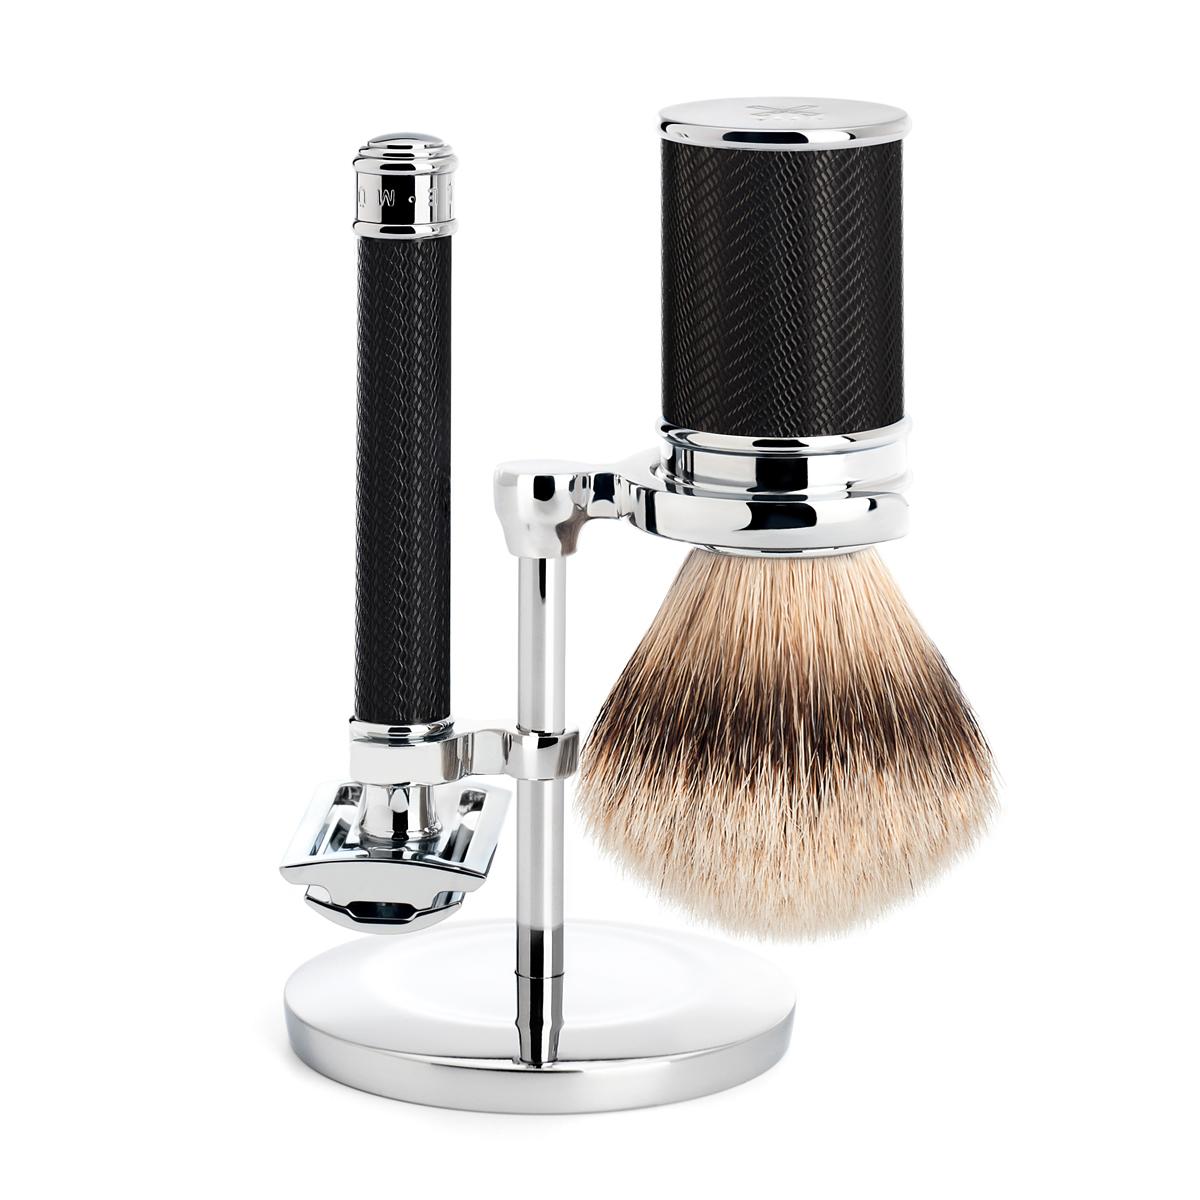 MUHLE Black and Chrome Traditional Safety Razor and Silvertip Badger Shaving Brush Shaving Set